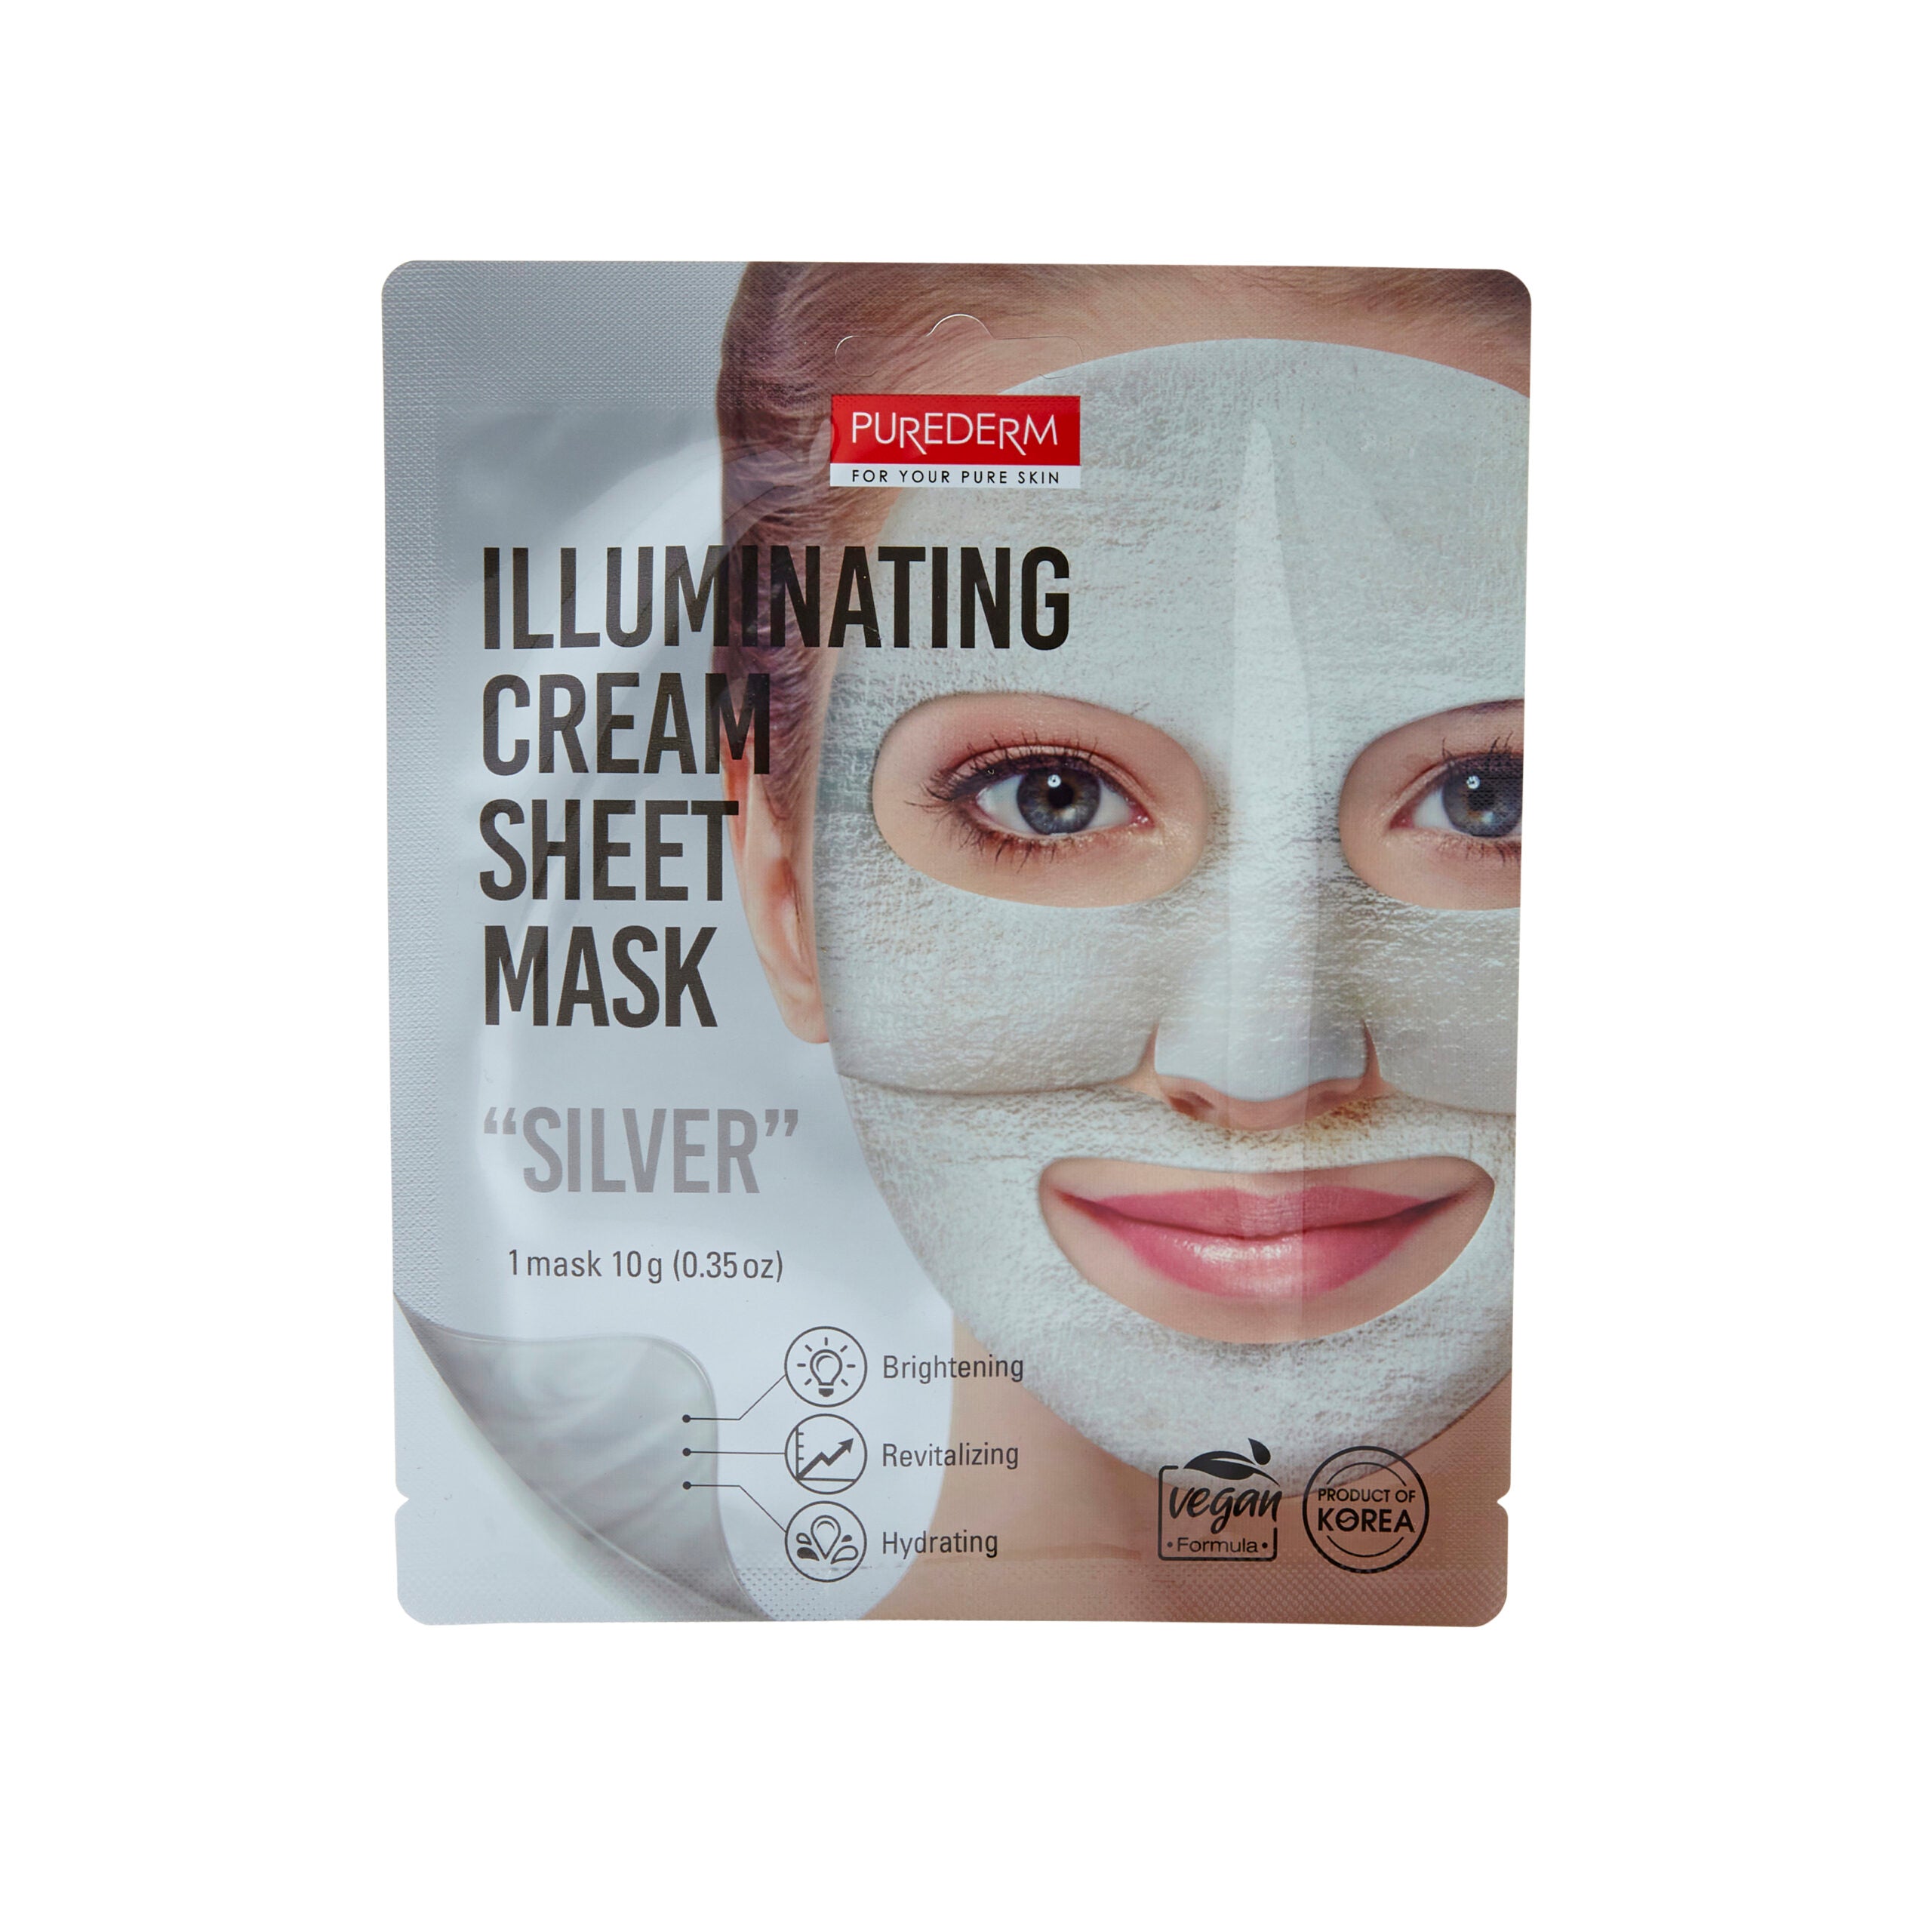 Purederm Illuminating Cream Sheet Mask Silver 10g